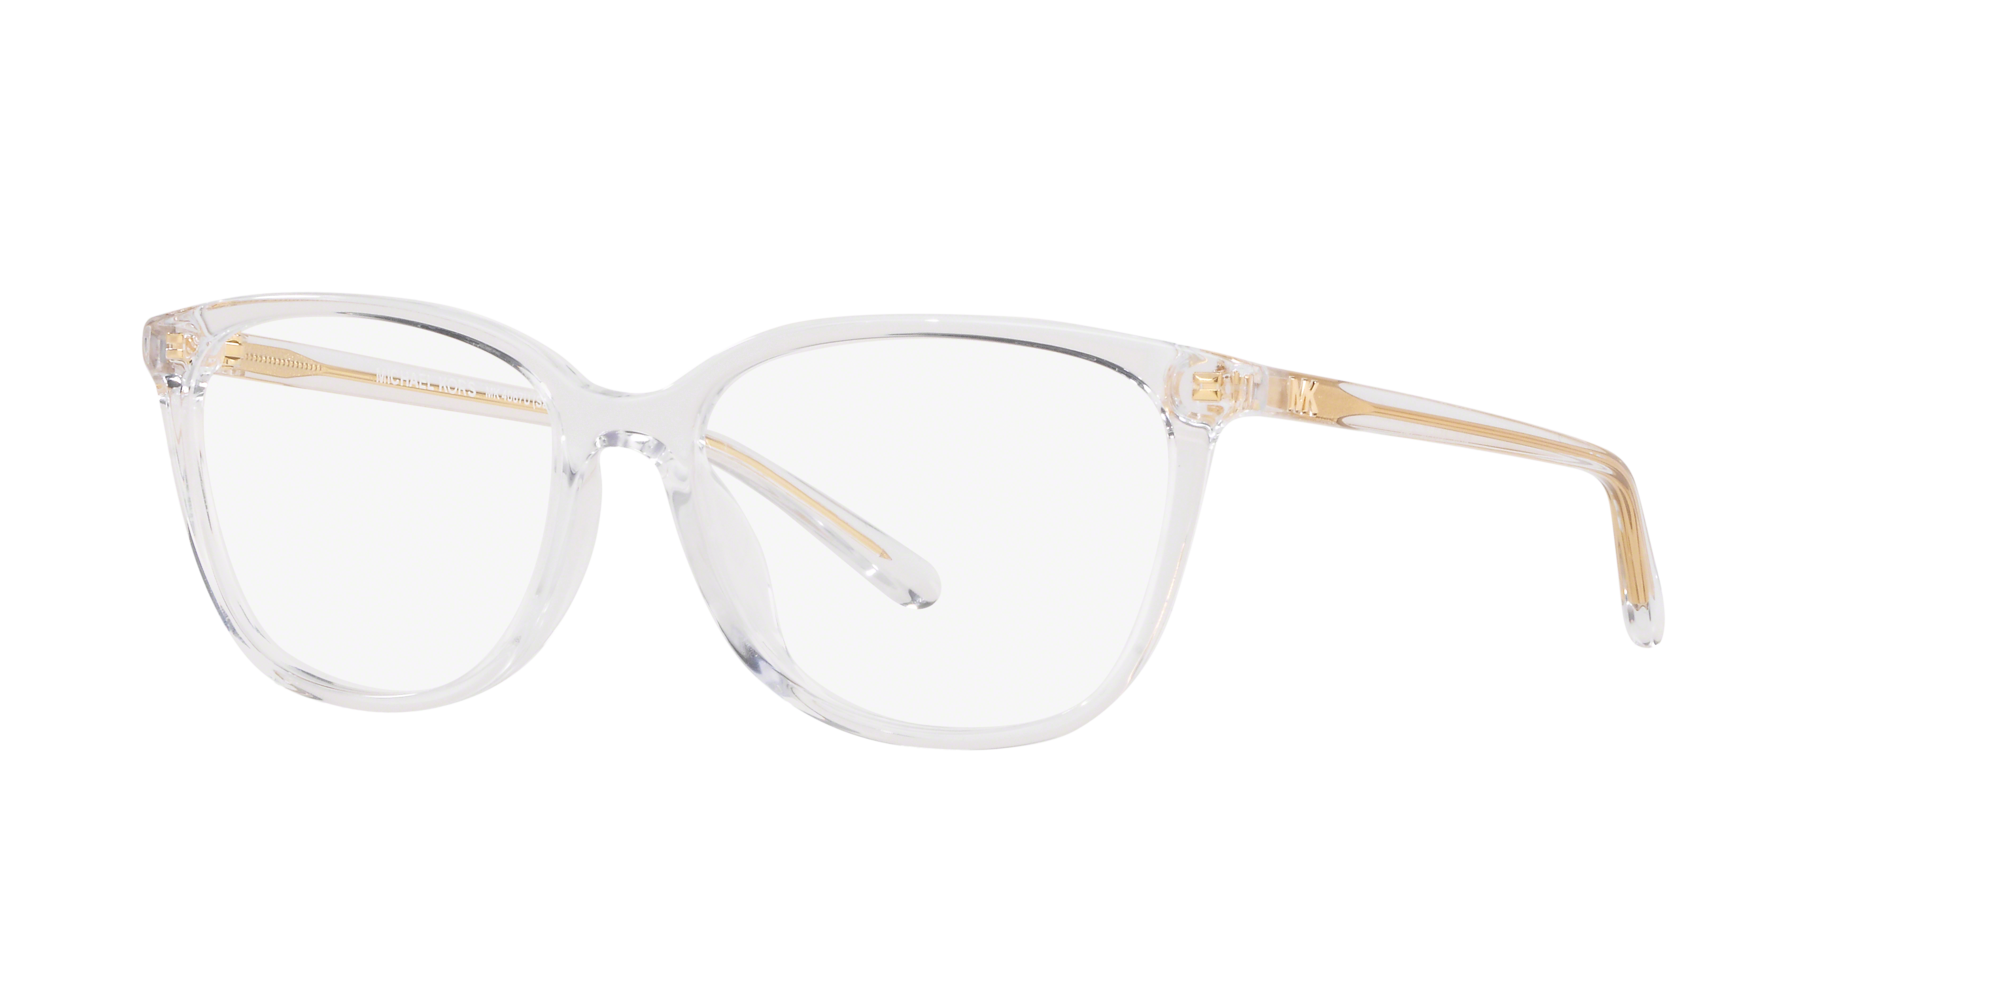 Angle_Left01 Michael Kors Santa Clara MK 4067U (3015) Glasses Transparent / Transparent, Clear